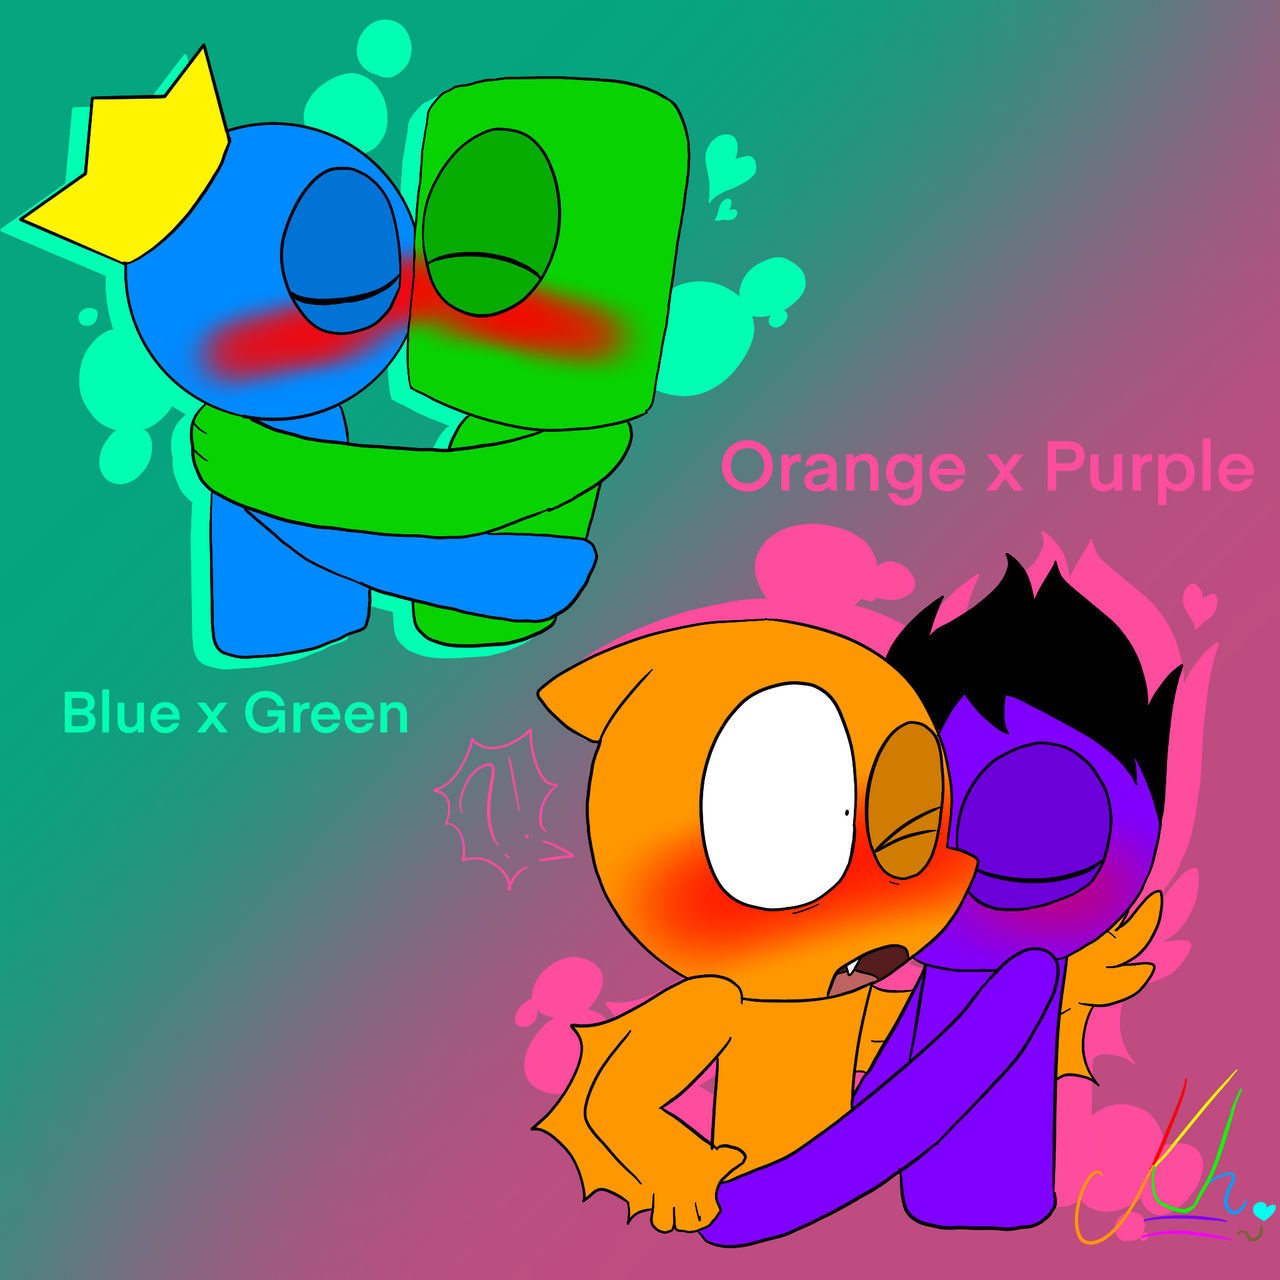 Orange x Purple by KumaDraws334 on DeviantArt